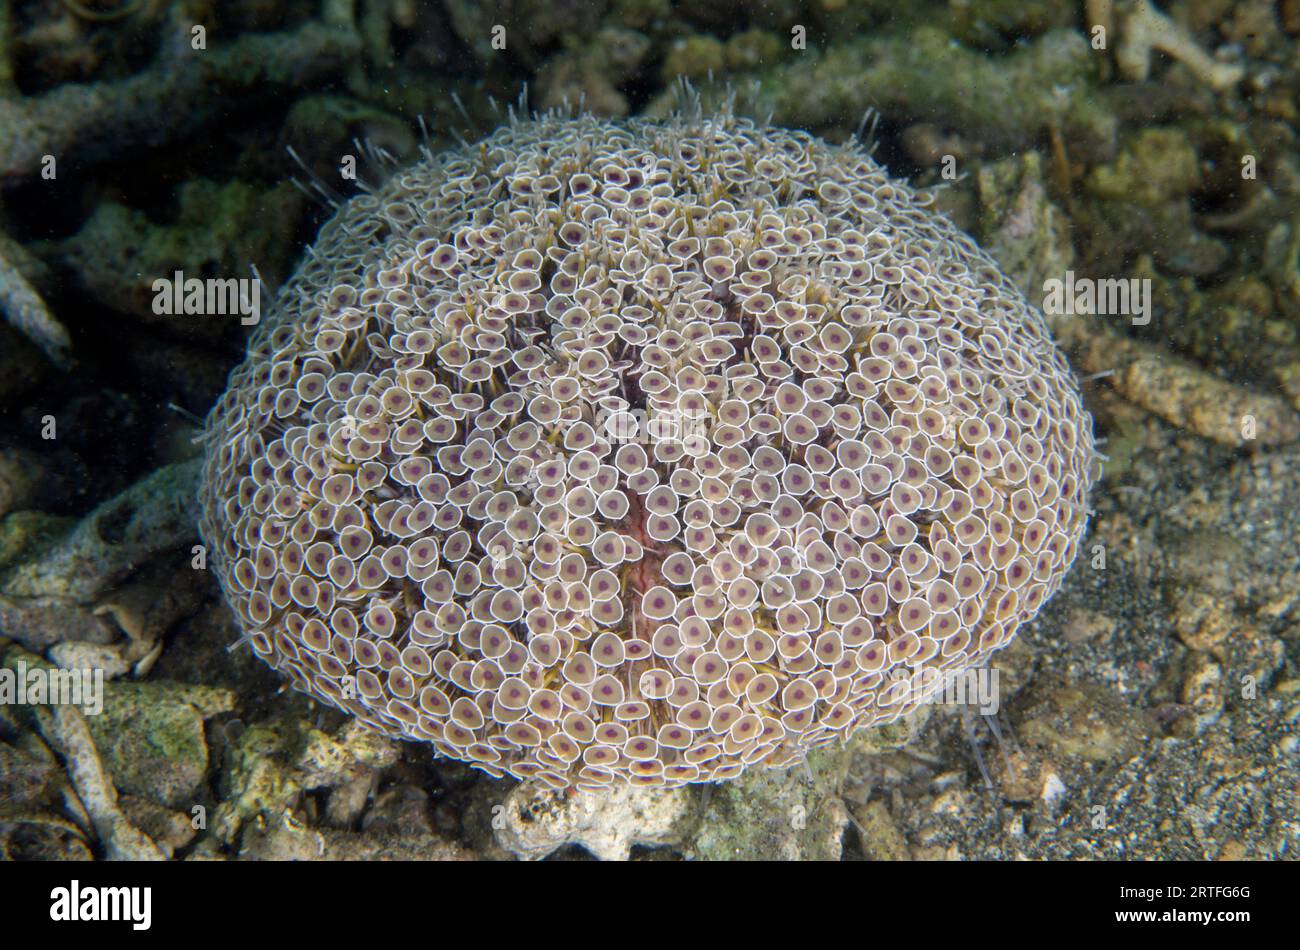 Flower Urchin, Toxopneustes pileolus, extremely toxic, Secret Bay dive site, Gilimanuk, Jembrana Regency, Bali, Indonesia Stock Photo